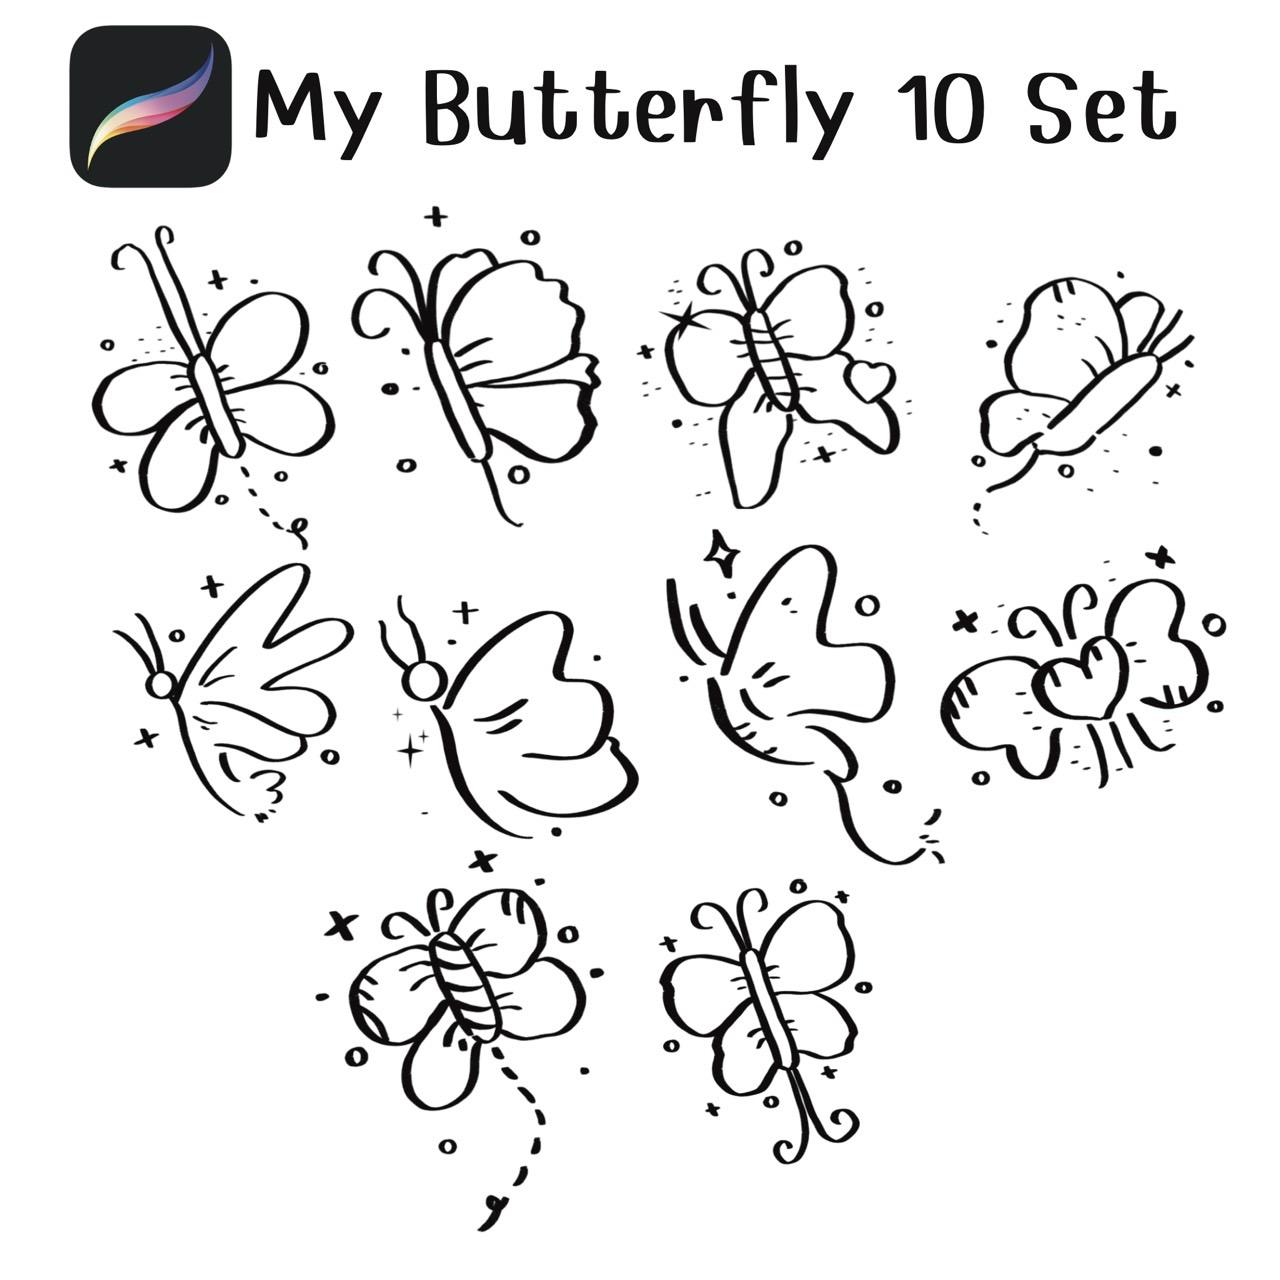 My Butterfly 10 Set